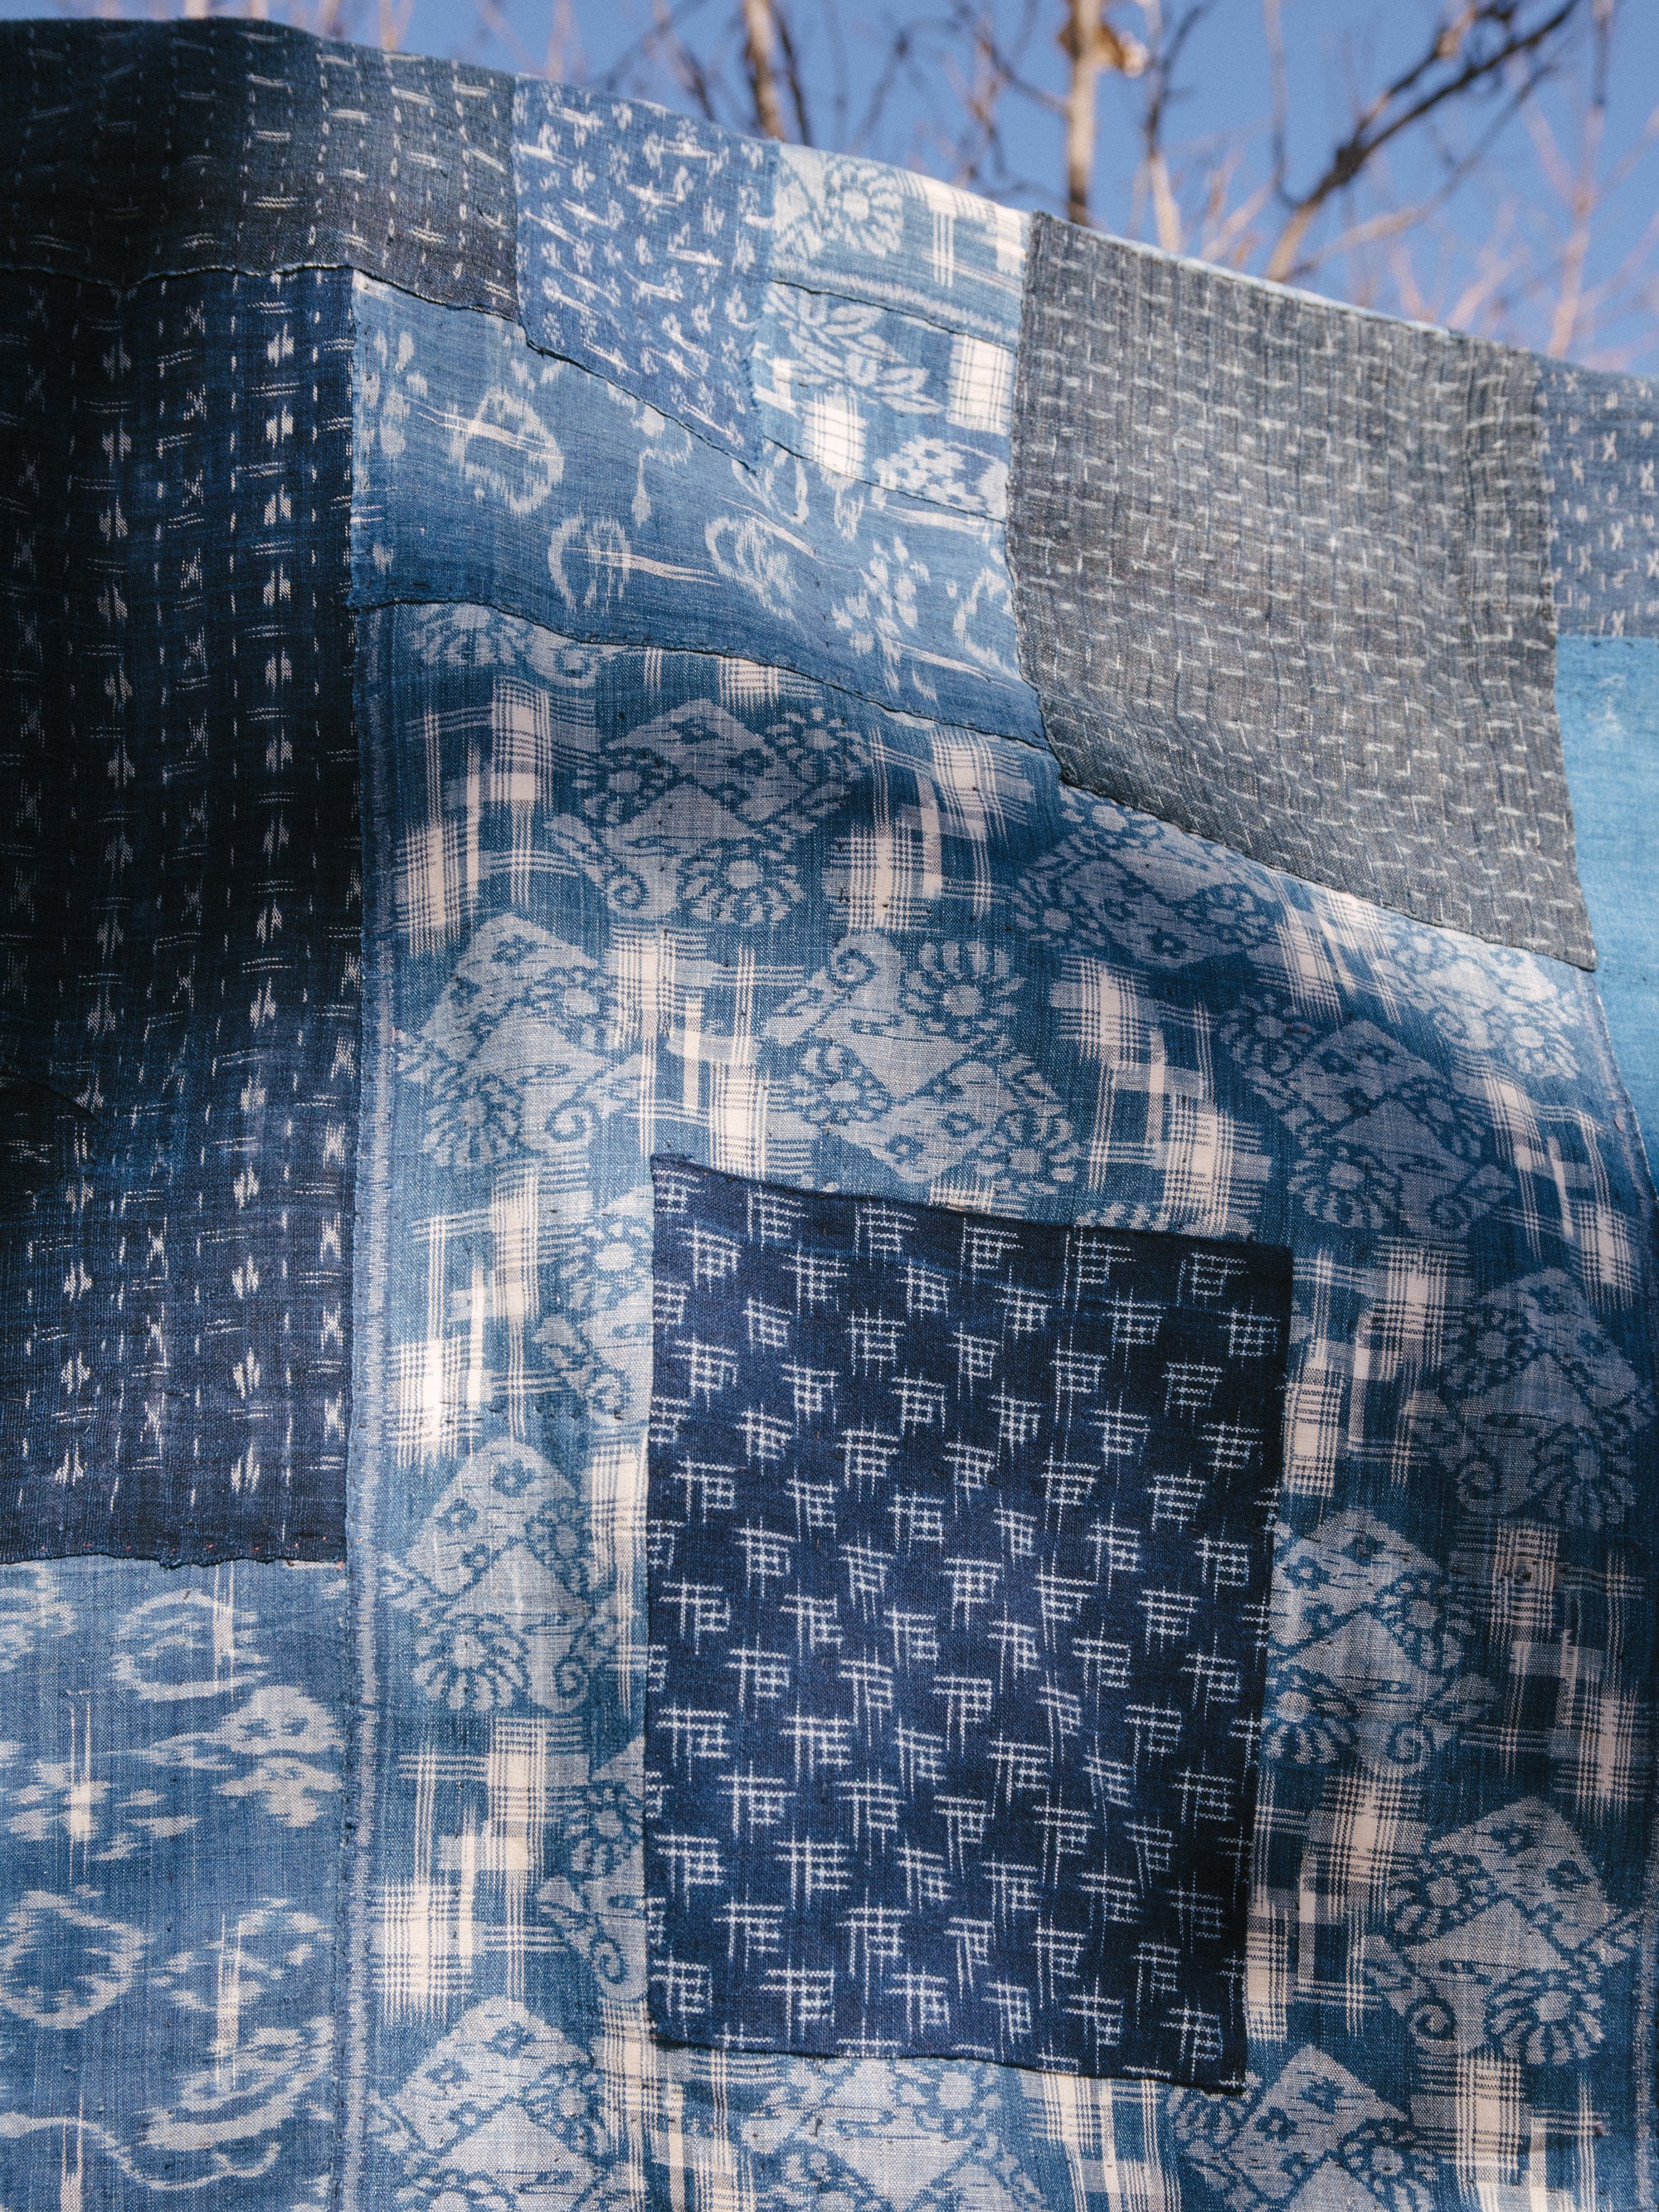 indigo kasuri fabric remnants from Japan